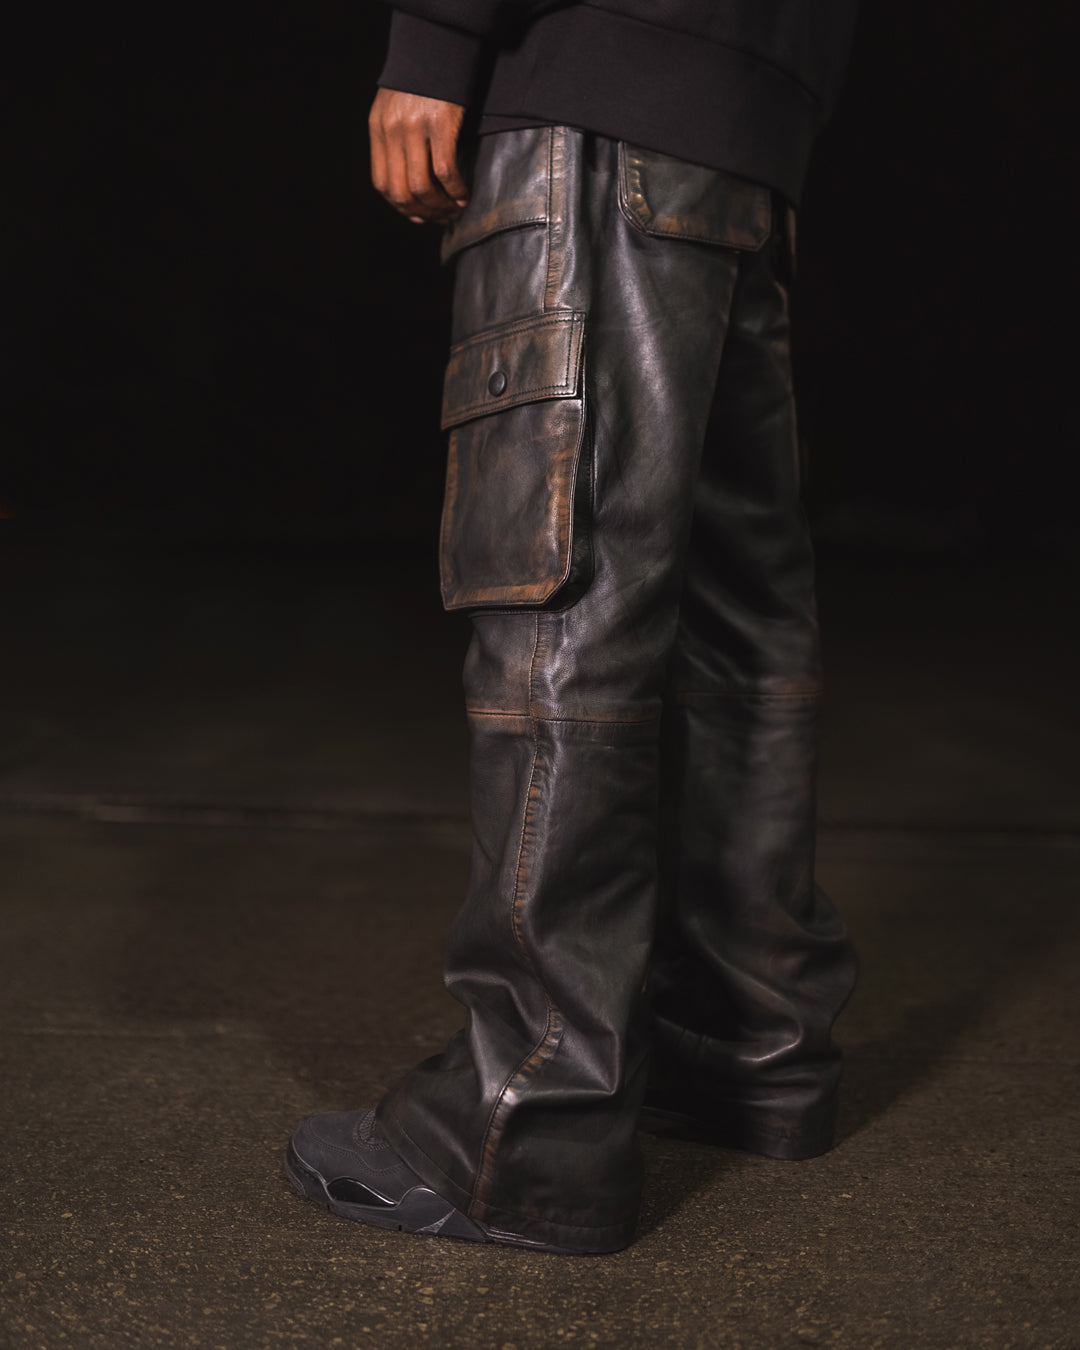 LeatherCult Drifter Leather Cargo Pants